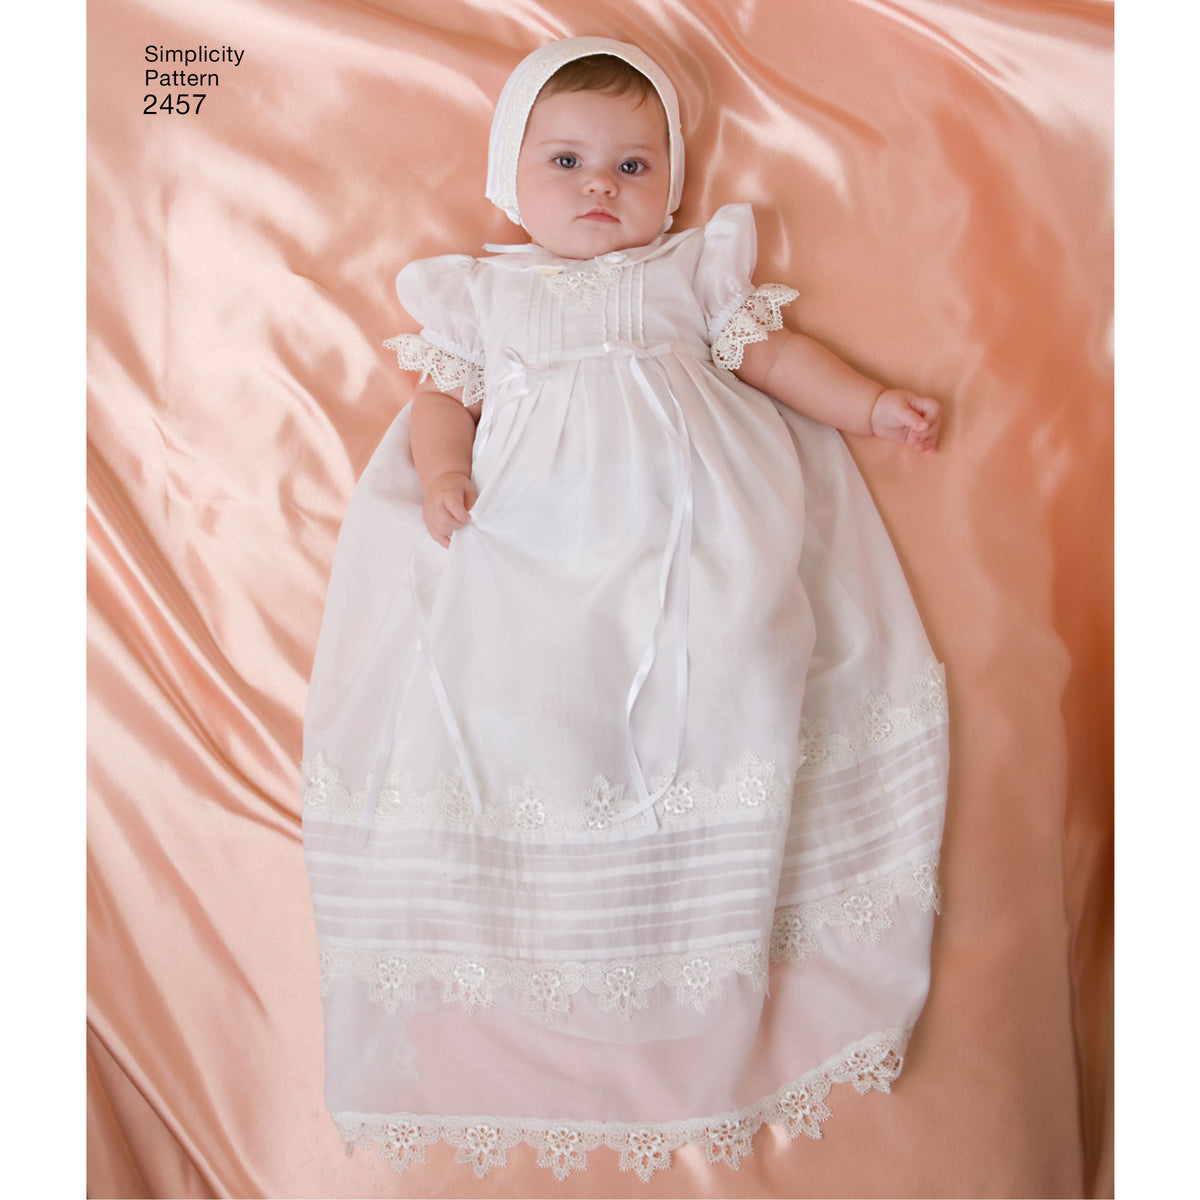 Baby Christening Gown /dress Pattern Plus Slip and Bonnet Sizes 7 12 13 15  16 18 Pounds Newborn Small Medium UNCUT Kitty Benton 7553 Mccalls - Etsy